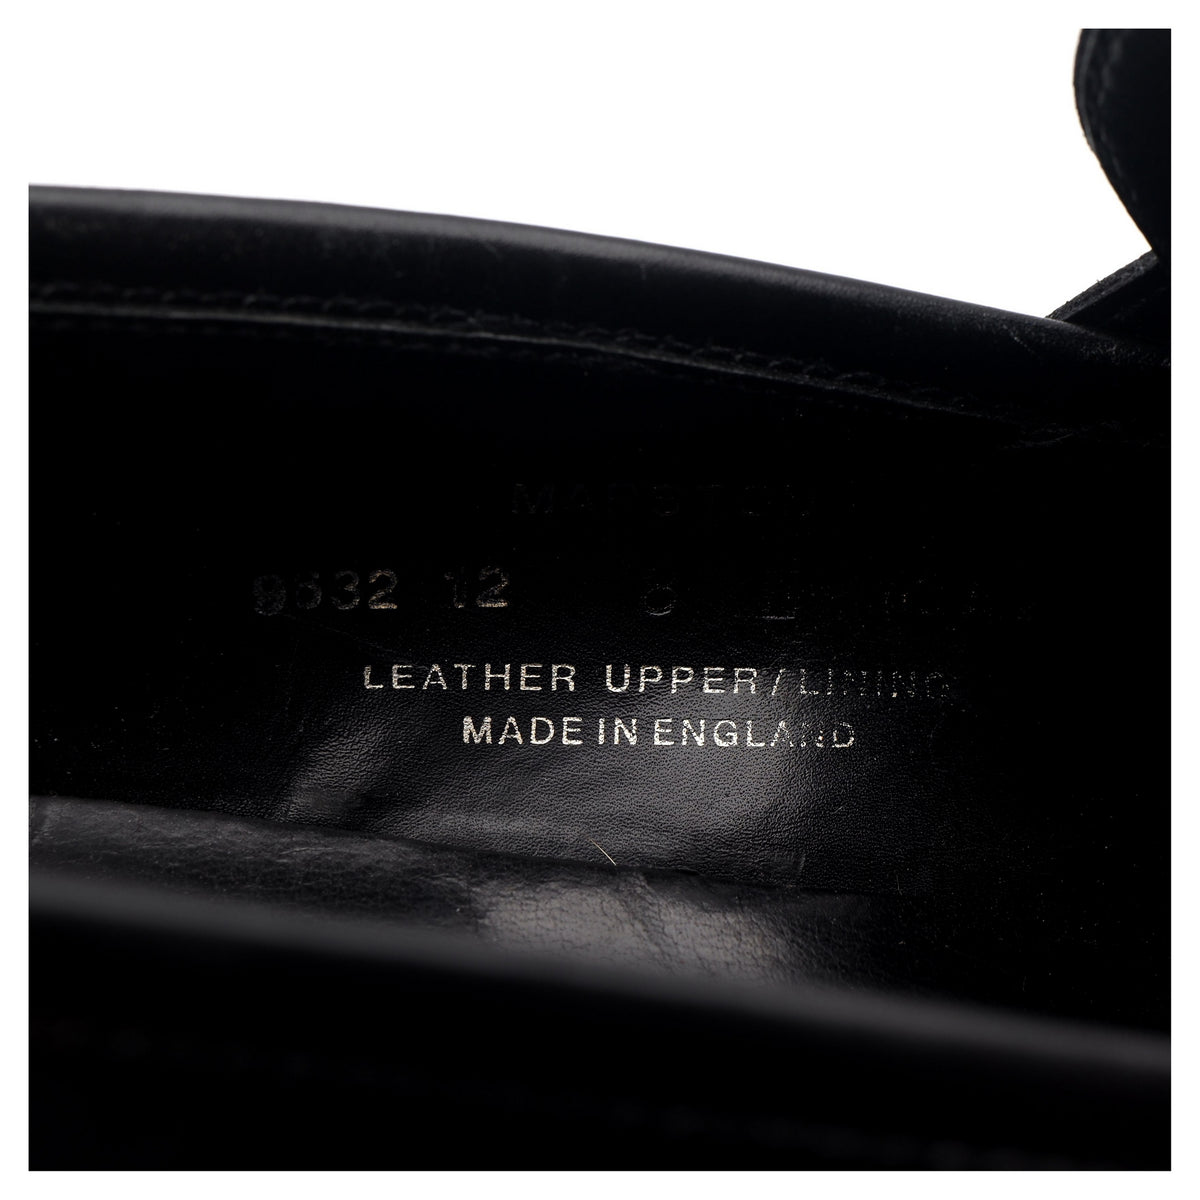 &#39;Marston&#39; Black Leather Loafers UK 8 E